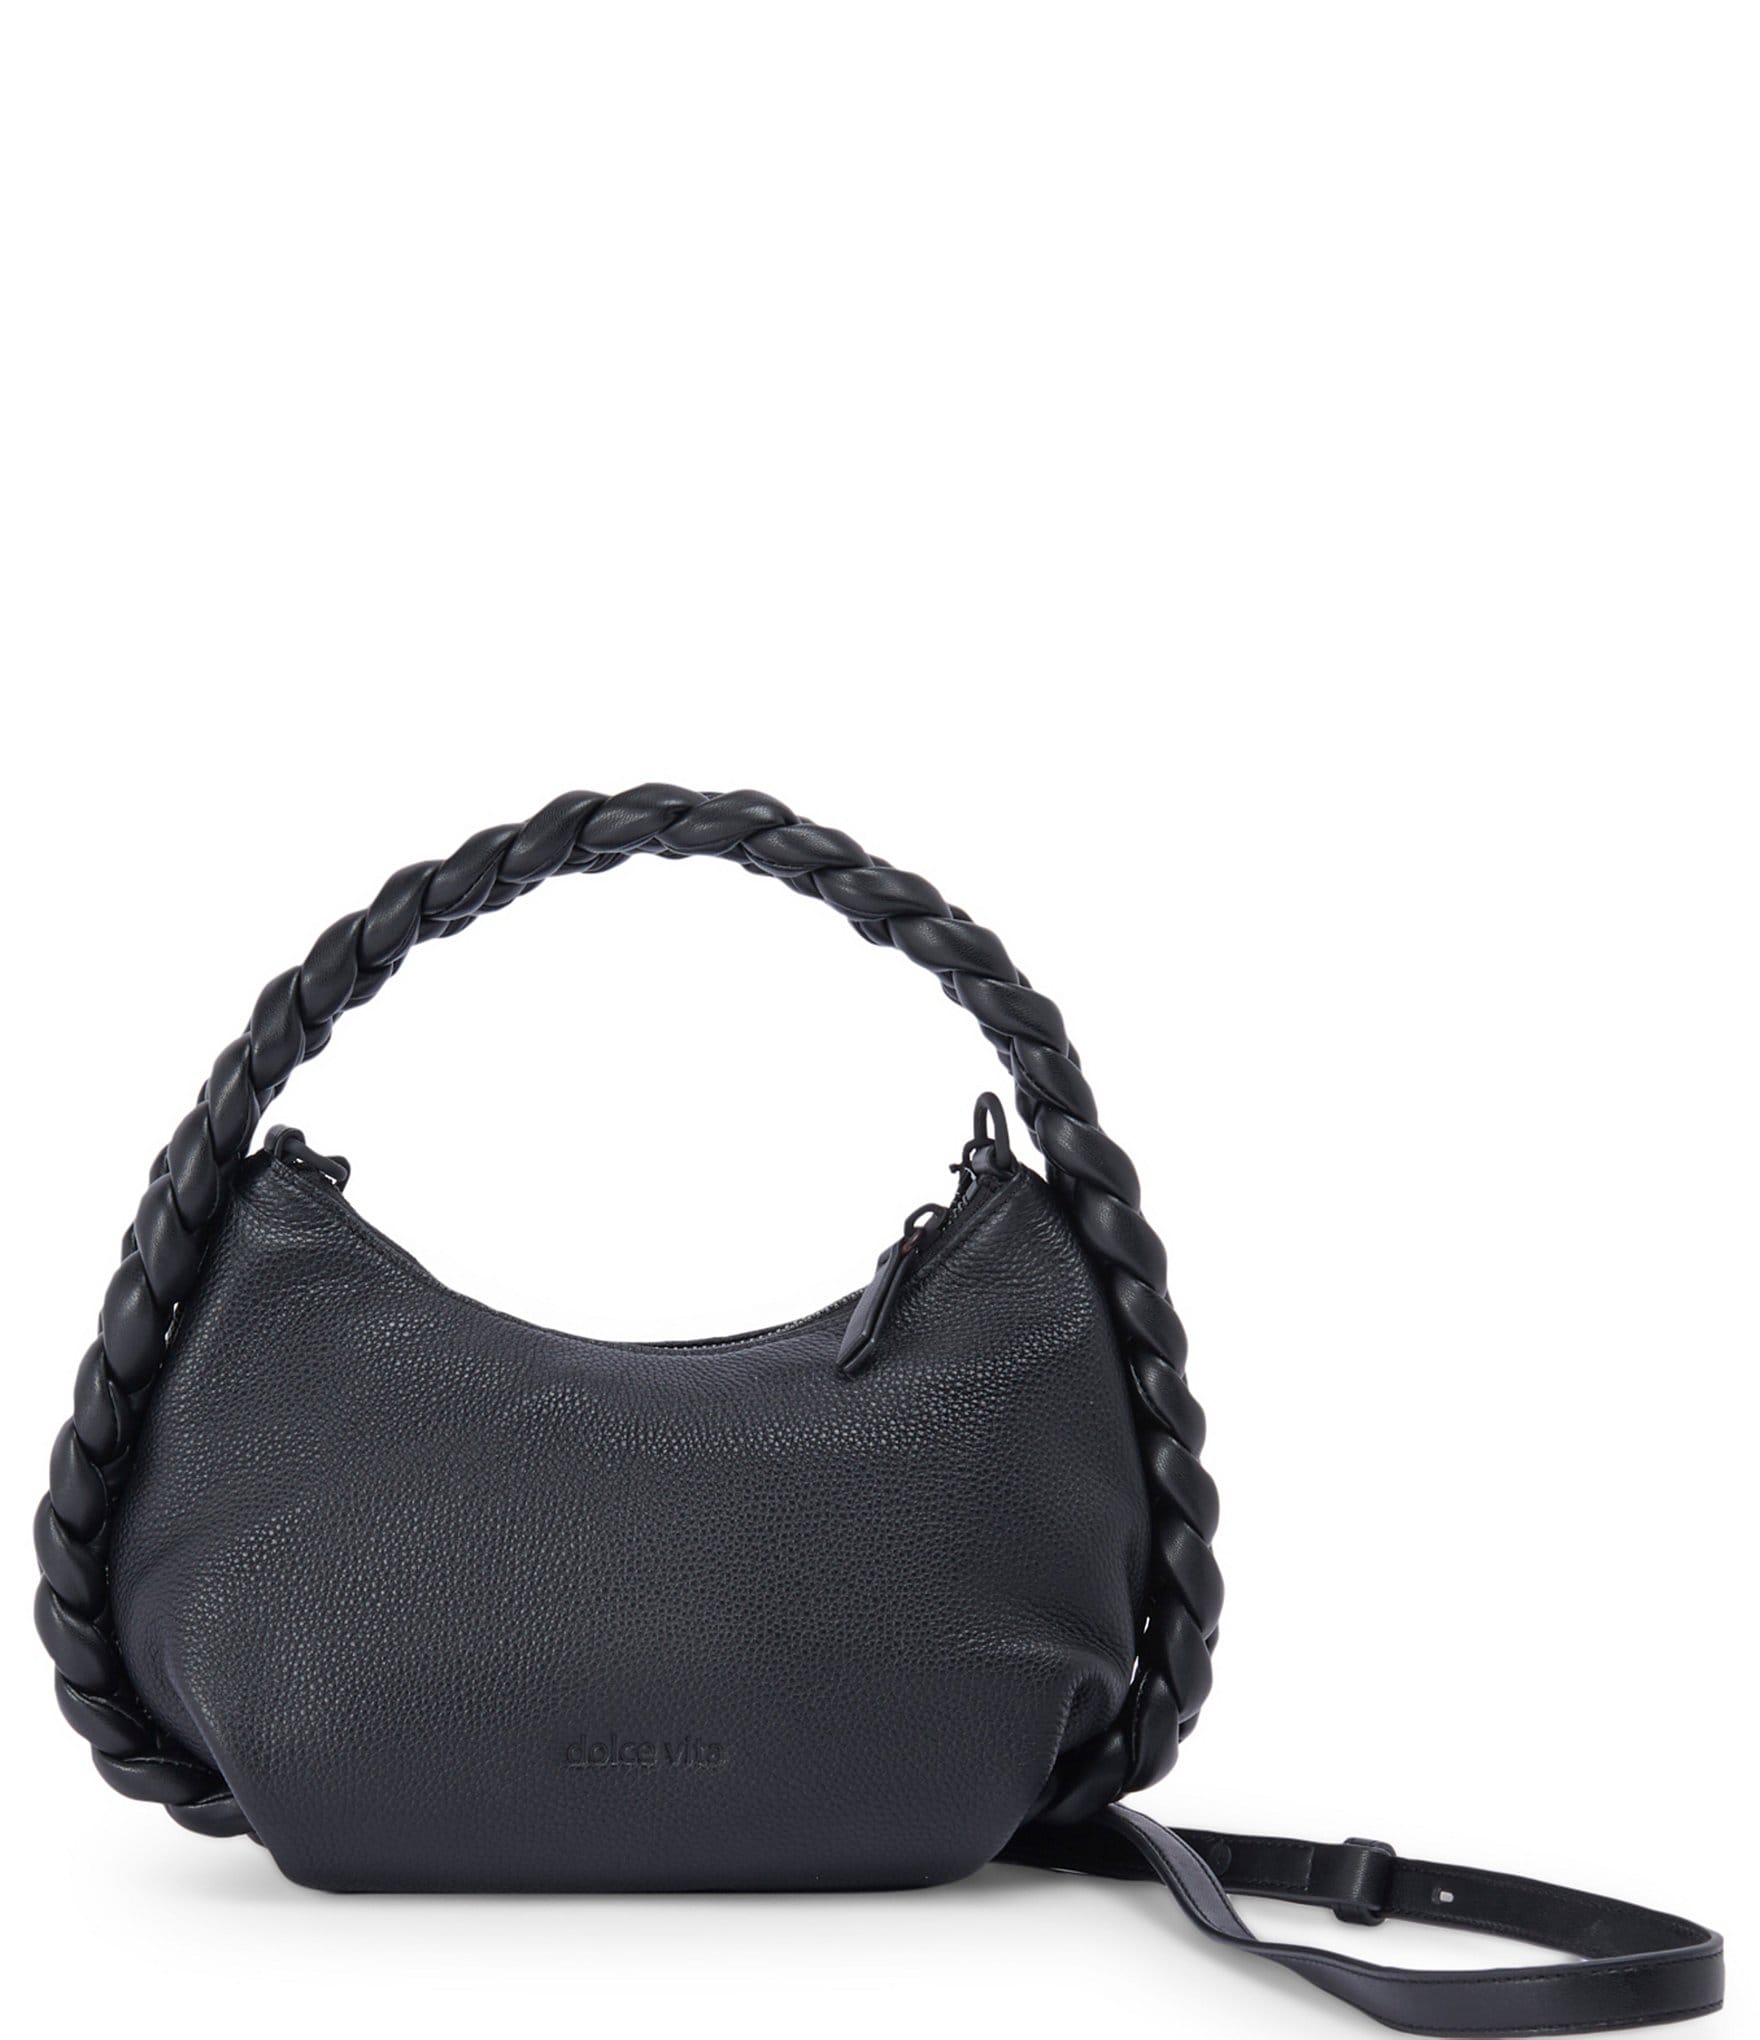 Dolce Vita Pippa Pebbled Leather Braided Handle Shoulder Bag | Dillard's